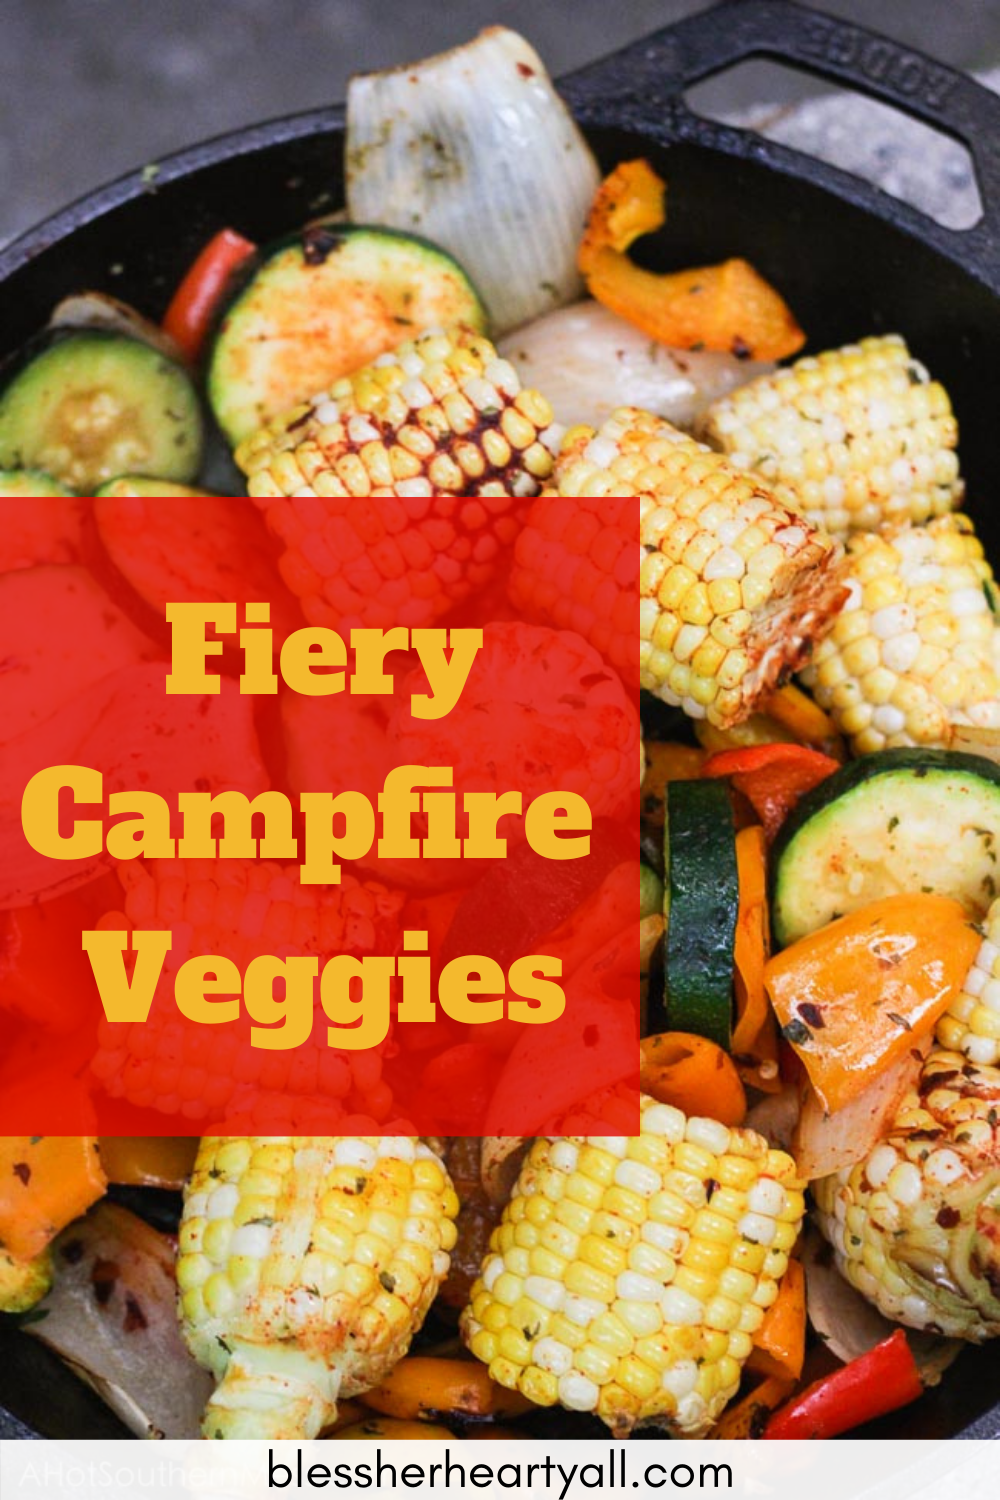 Fiery Campfire Veggies